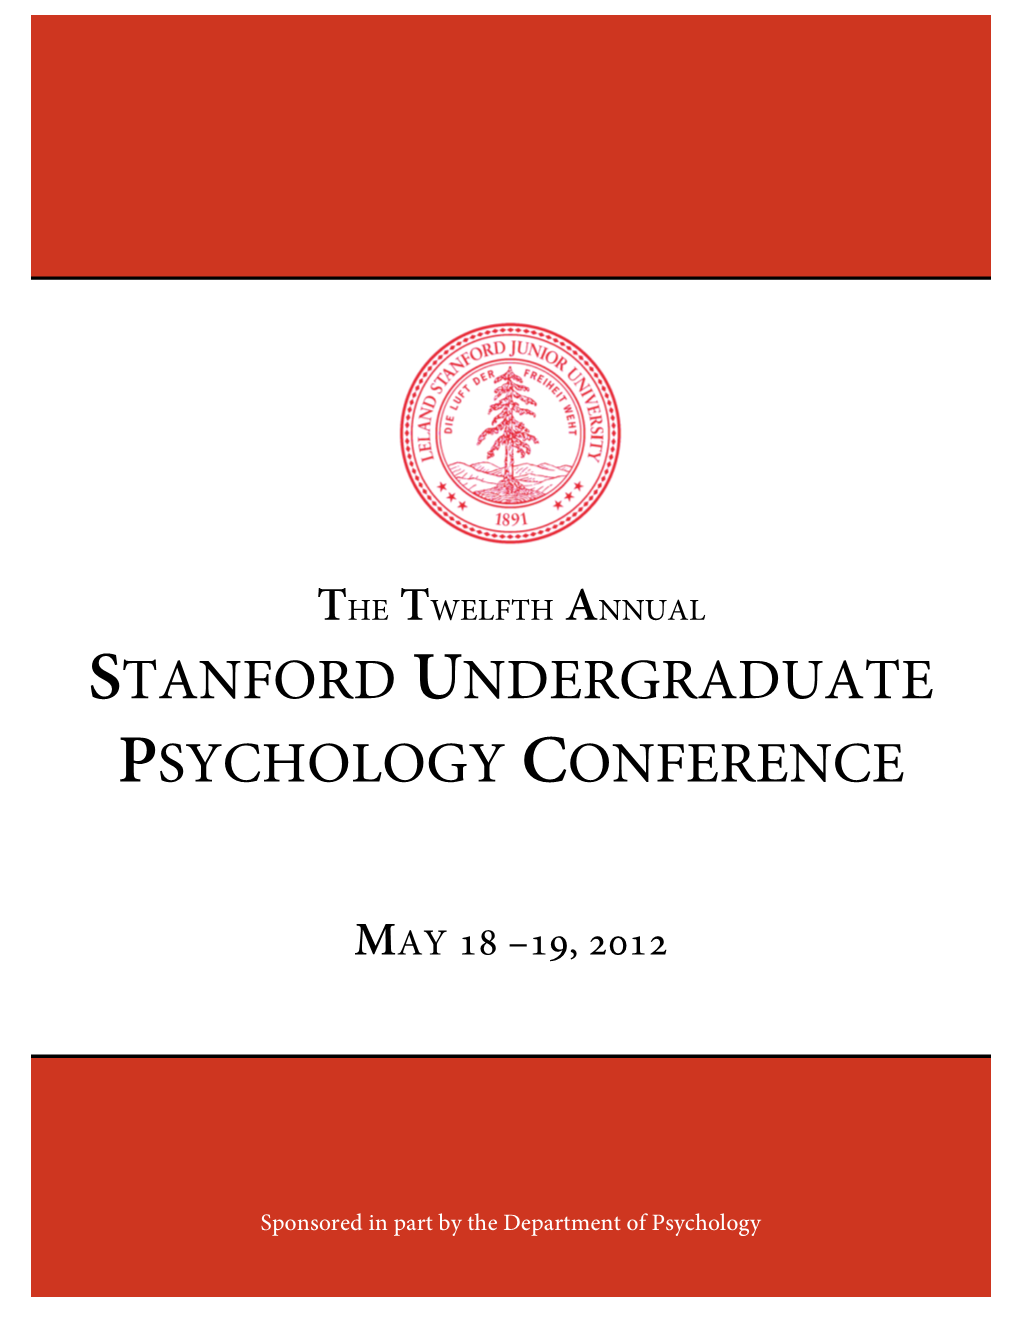 Stanford Undergraduate Psychology Conference